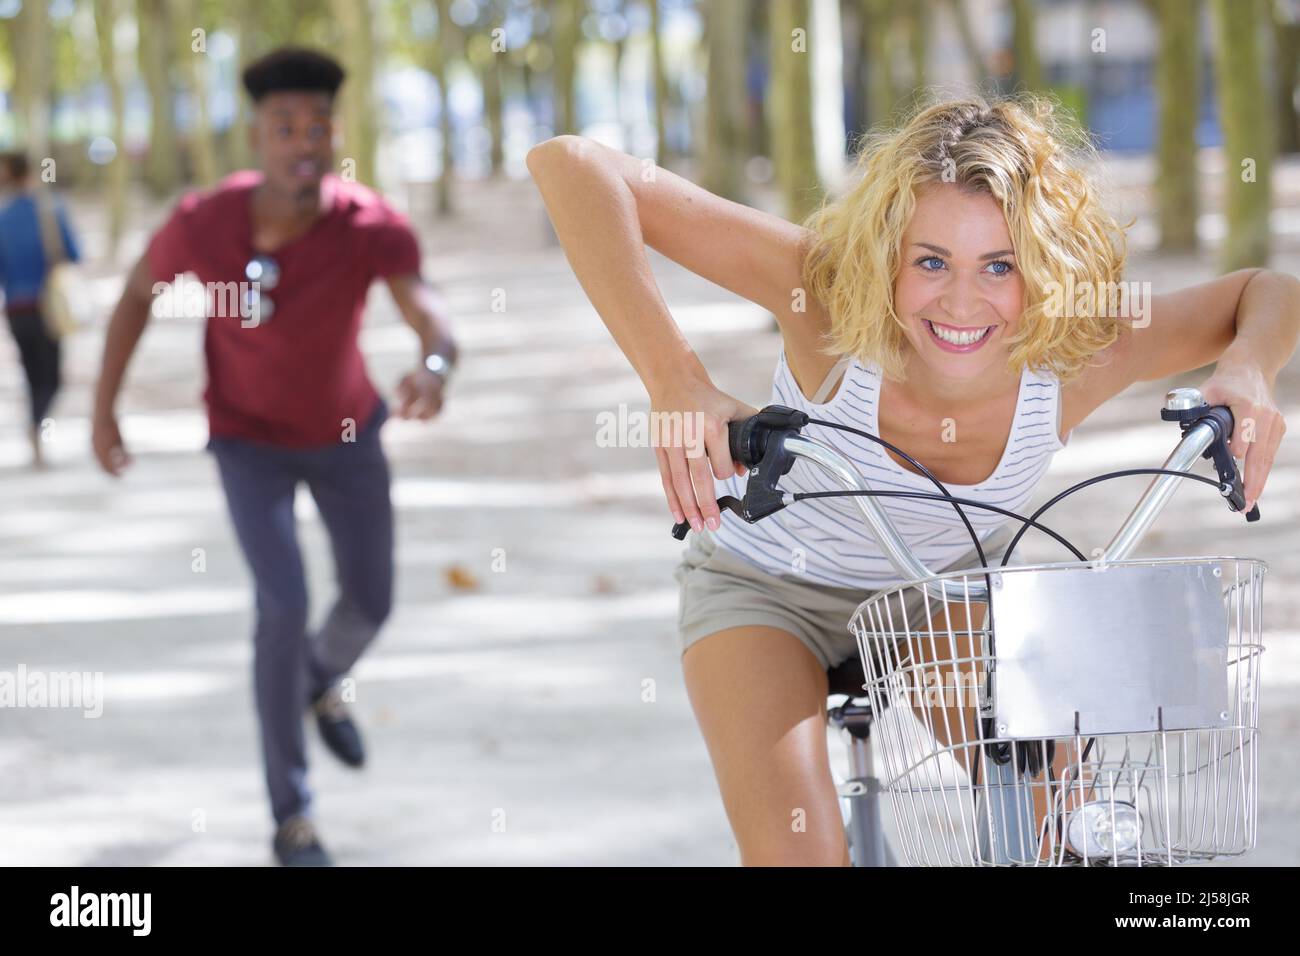 woman in bicycle racing male partner walking behind Stock Photo